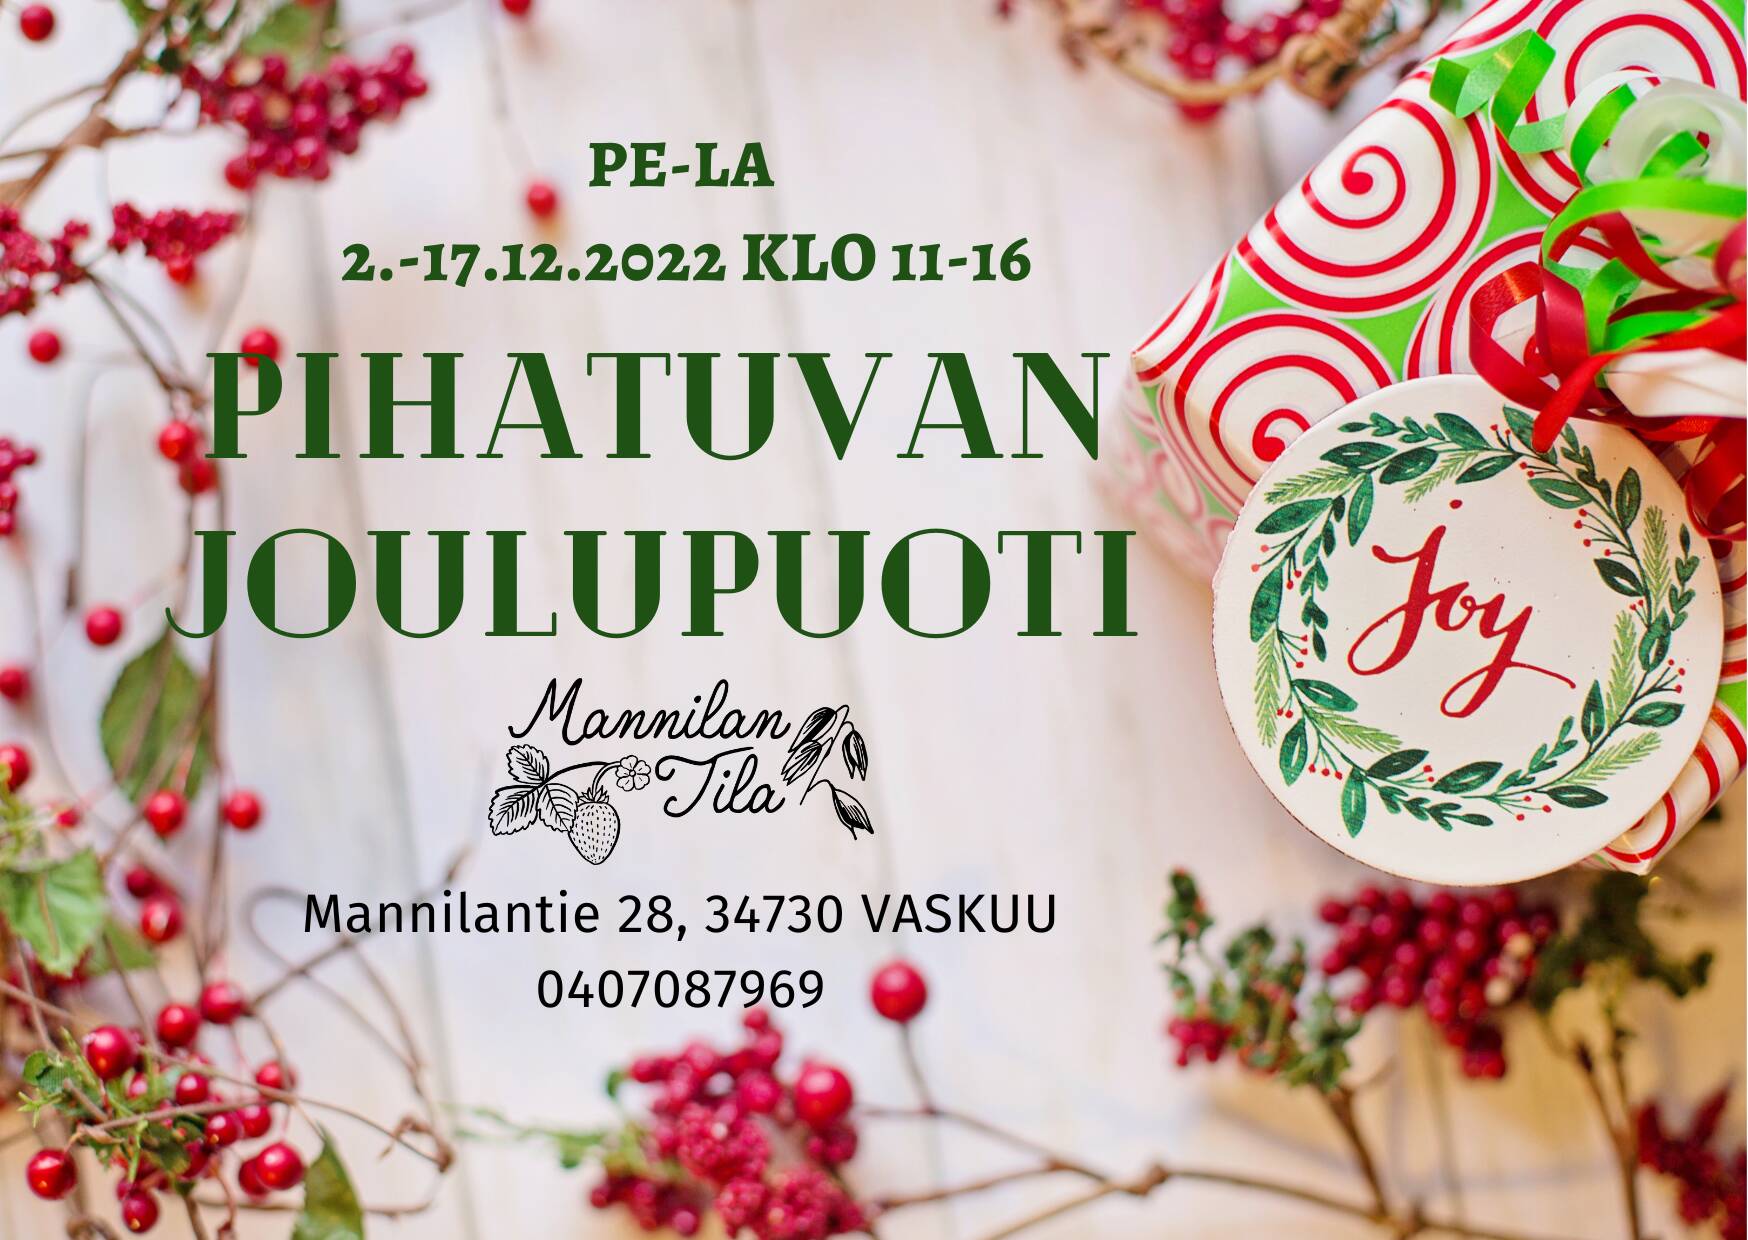 Mannilan Tilan Pihatuvan Joulupuoti pe-la 2.-17.12.2022 klo 11-16